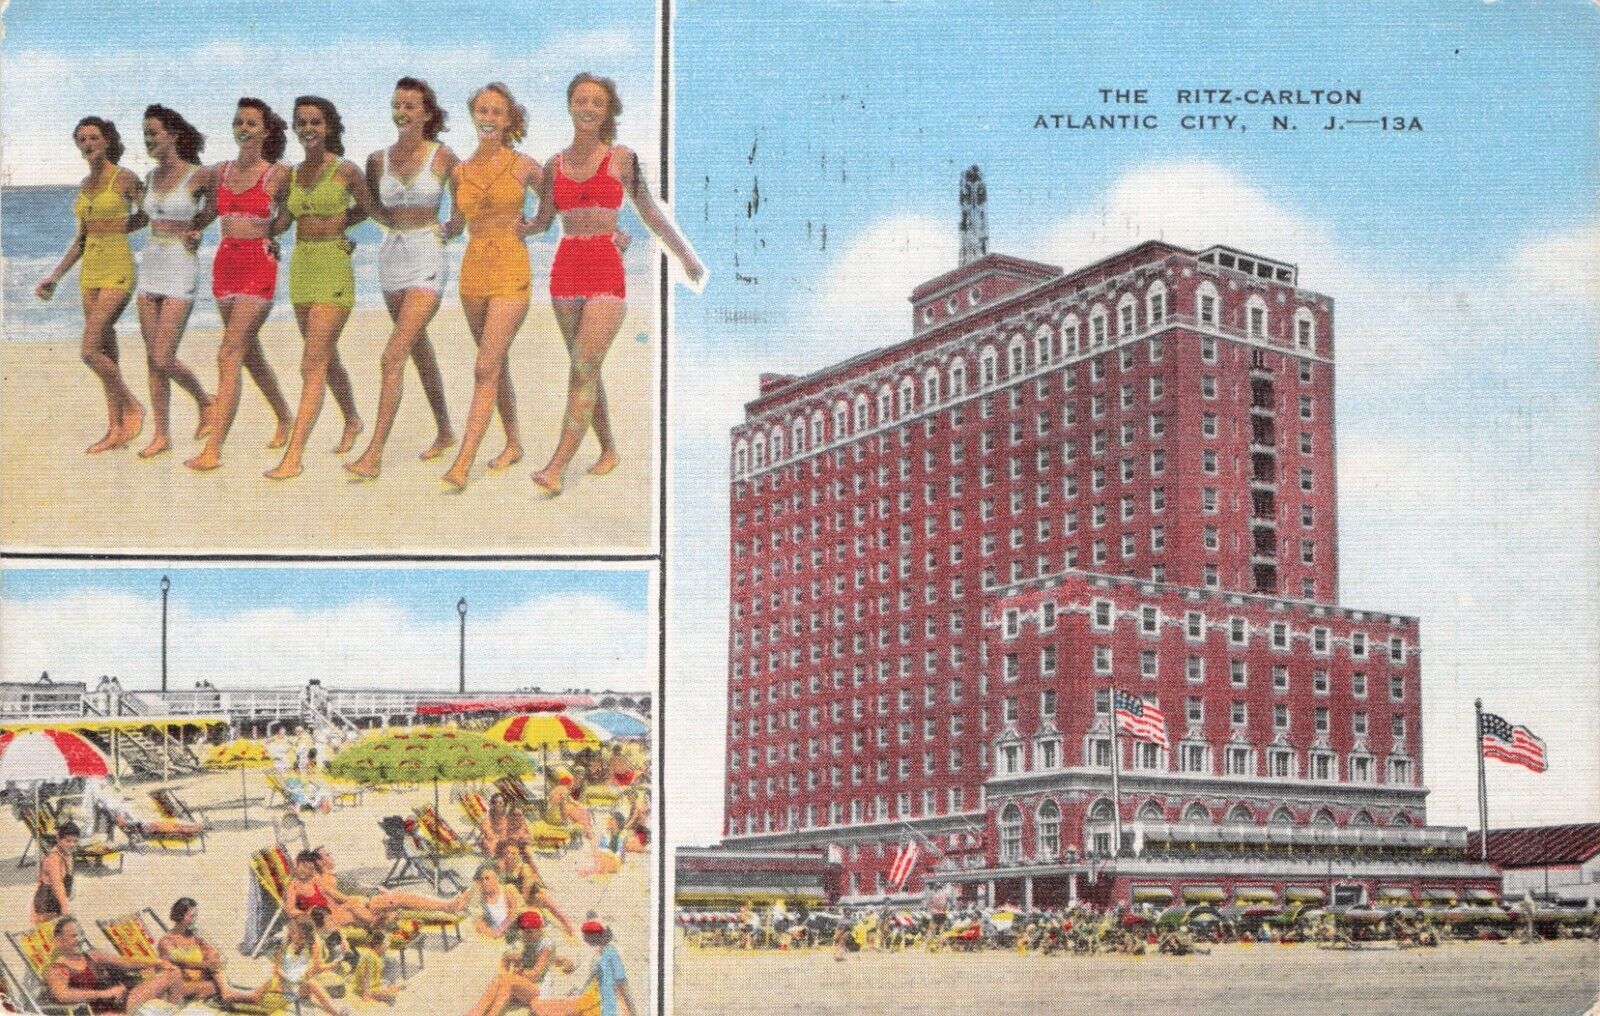 Atlantic City  NJ Ritz Carlton Hotel Ladies in Bikinis Vintage Postcard 1950